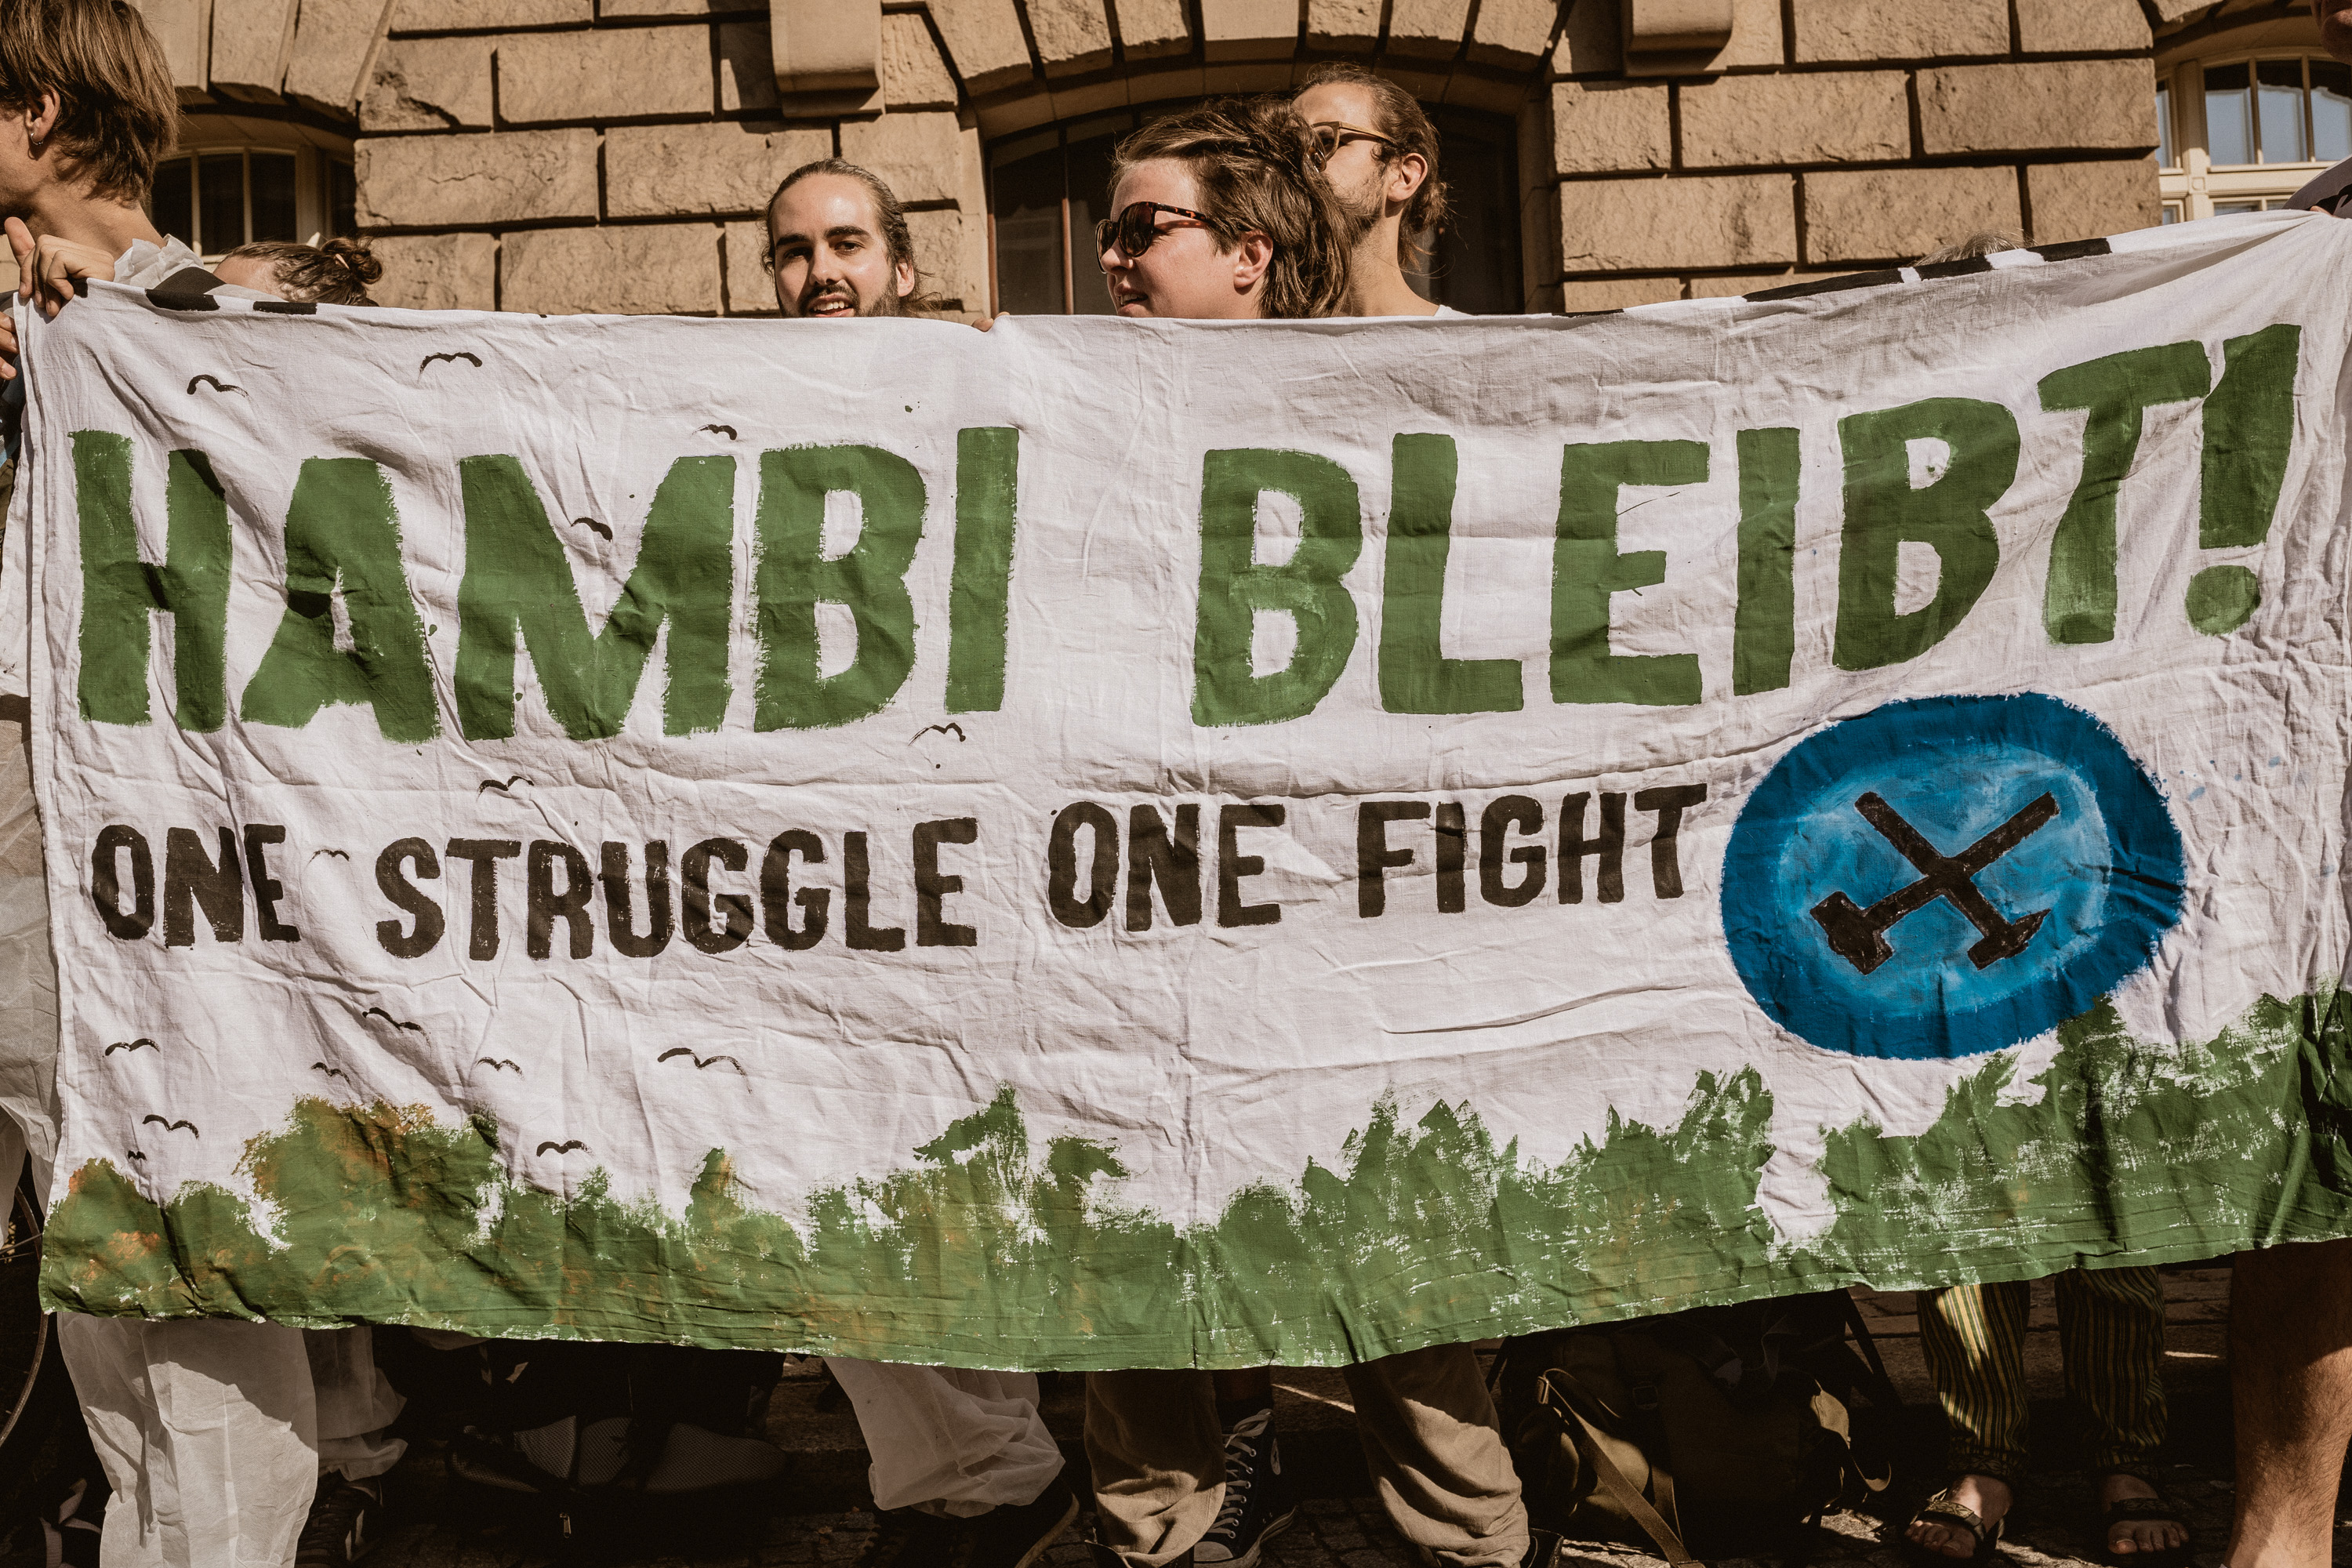 Critical Mass: #HambiBleibt – Kohleausstieg jetzt!  – So. 30.09, 12 Uhr